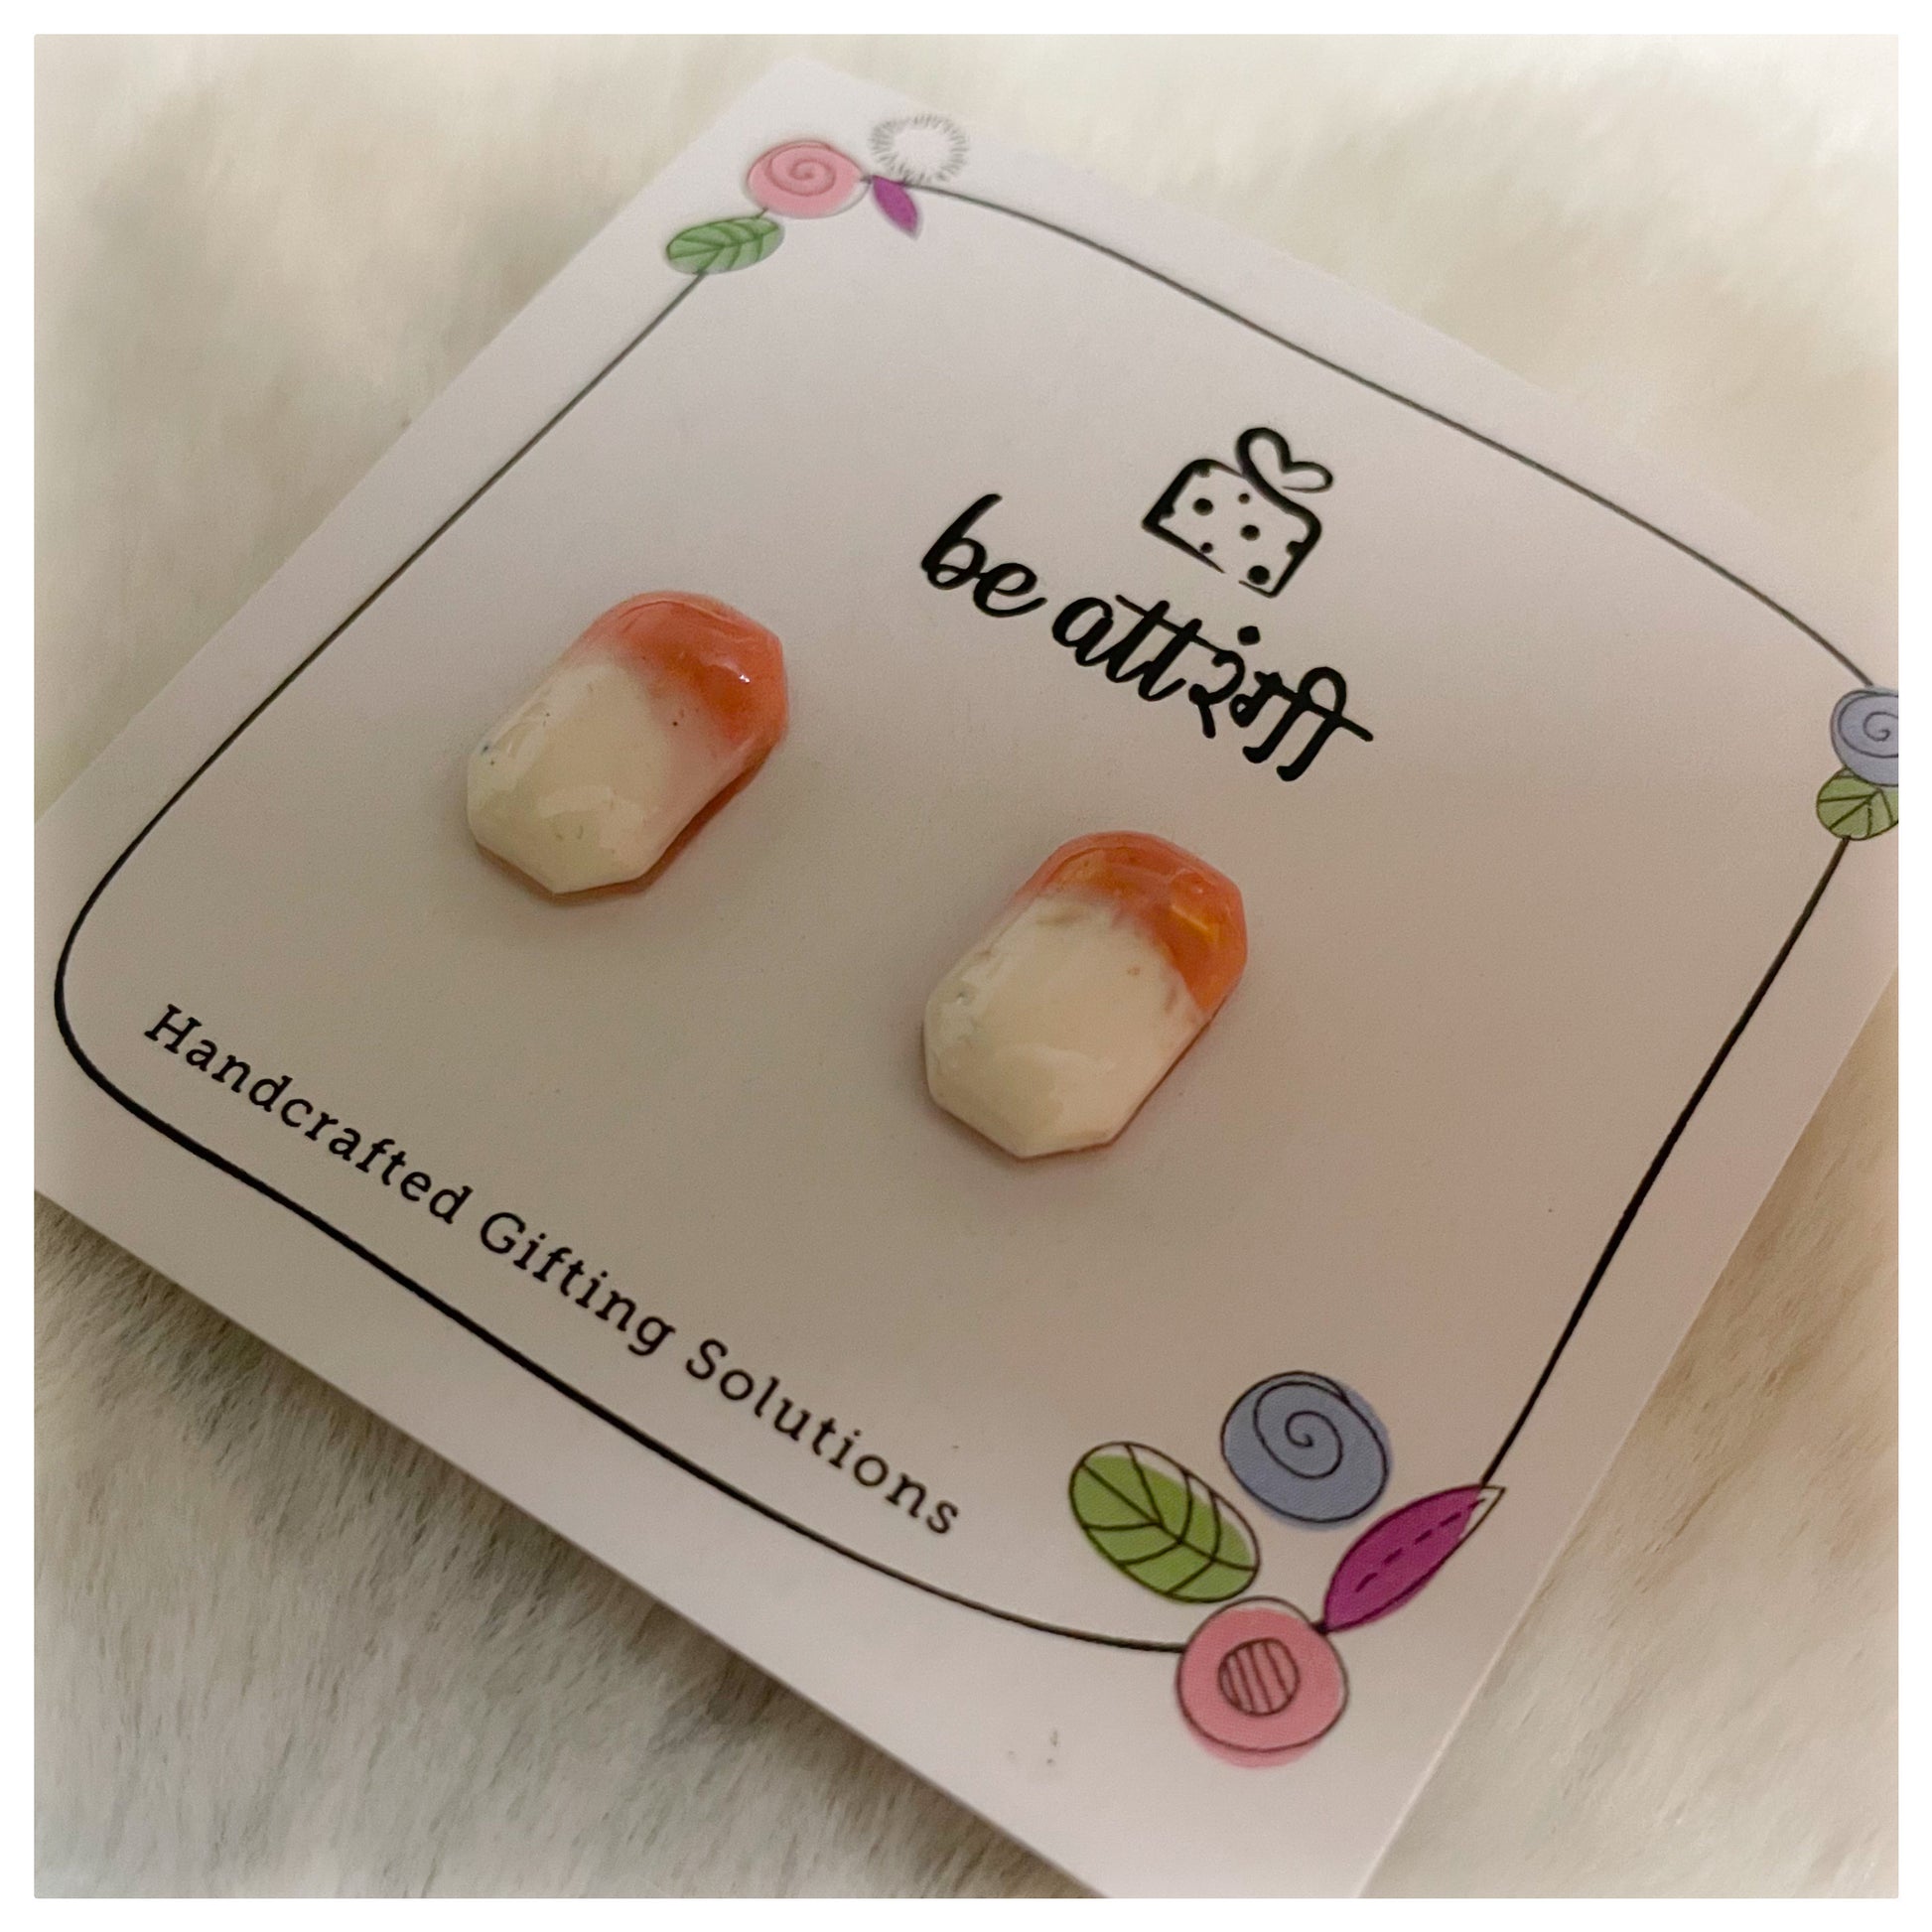 The Ice Candy Stud Earrings - beattrangi